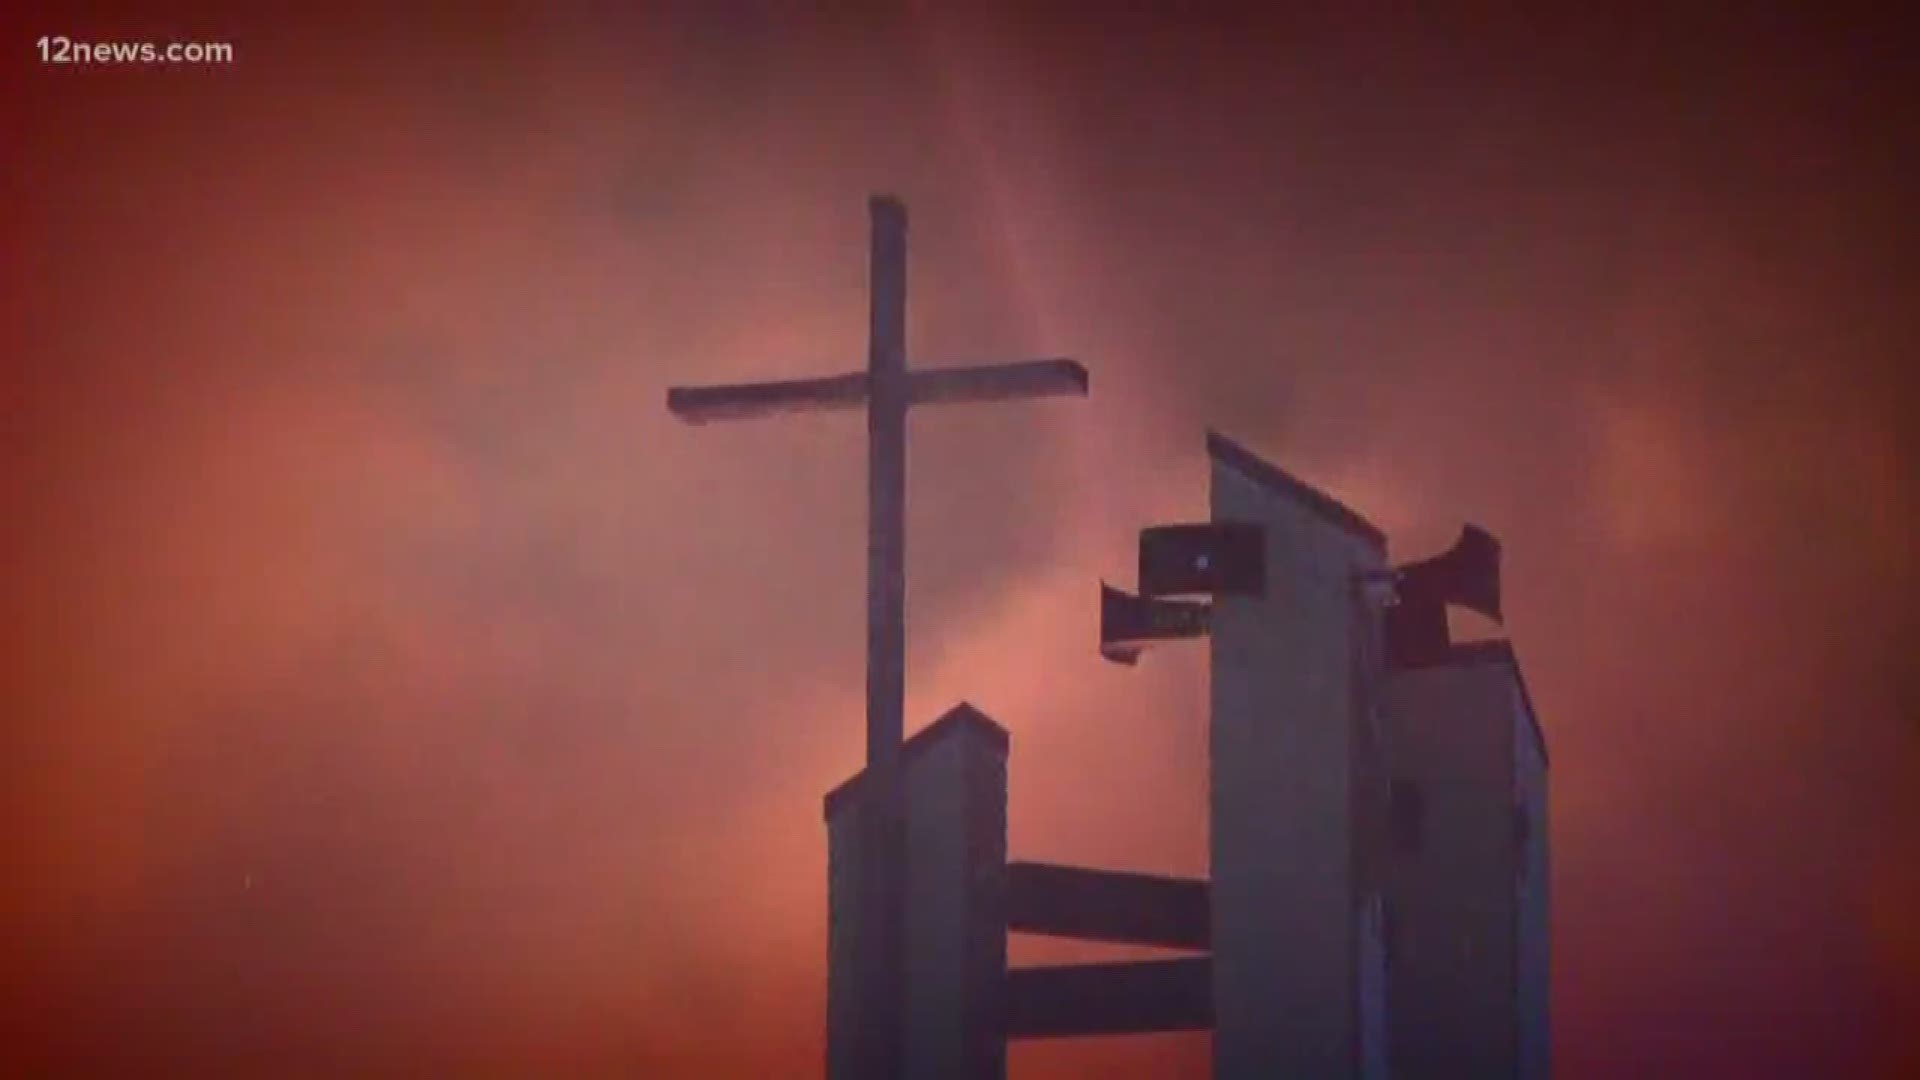 Hundreds worshiped at St. Joseph's, despite last week's devastating fire.